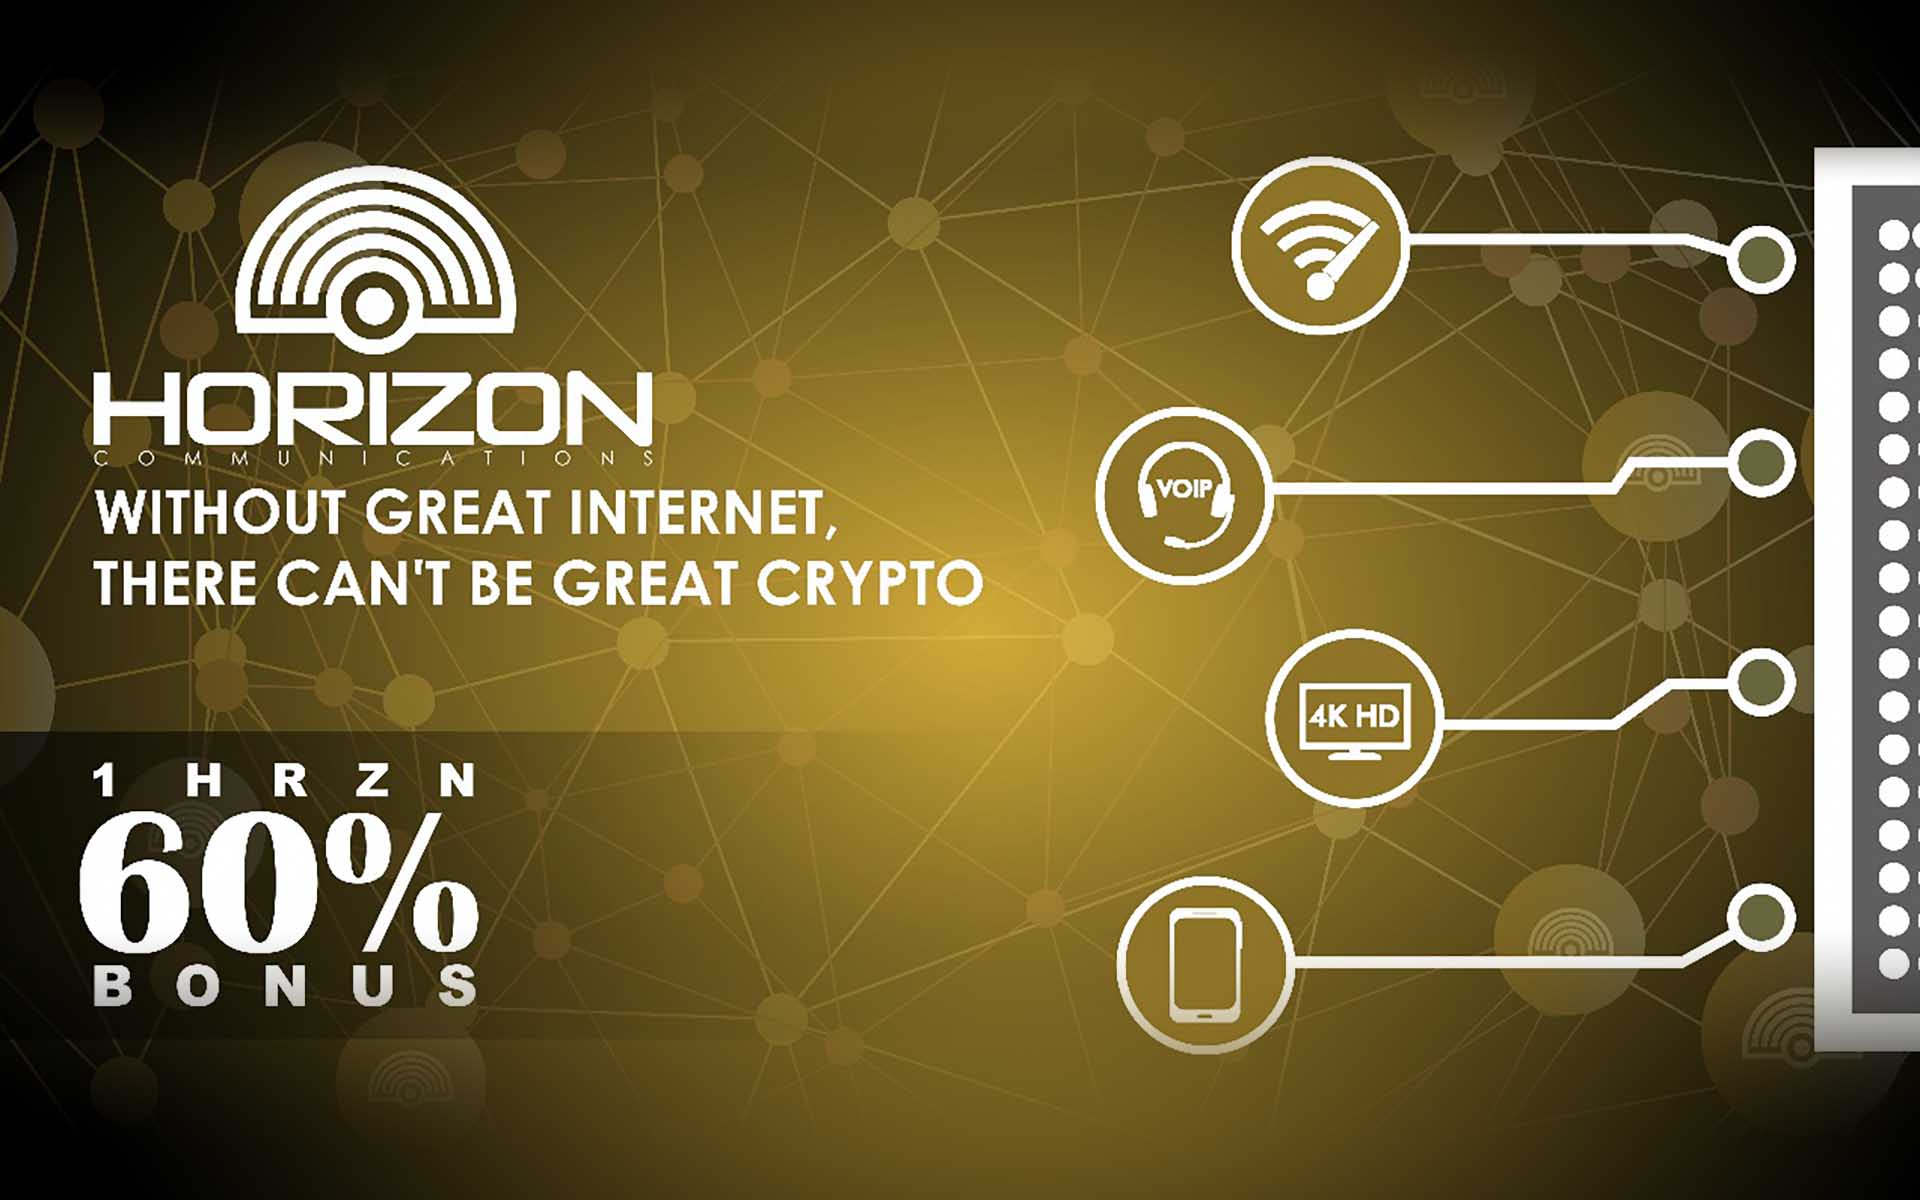 Horizon Pre-ICO Starting March 19 - 60% Discount for Investors